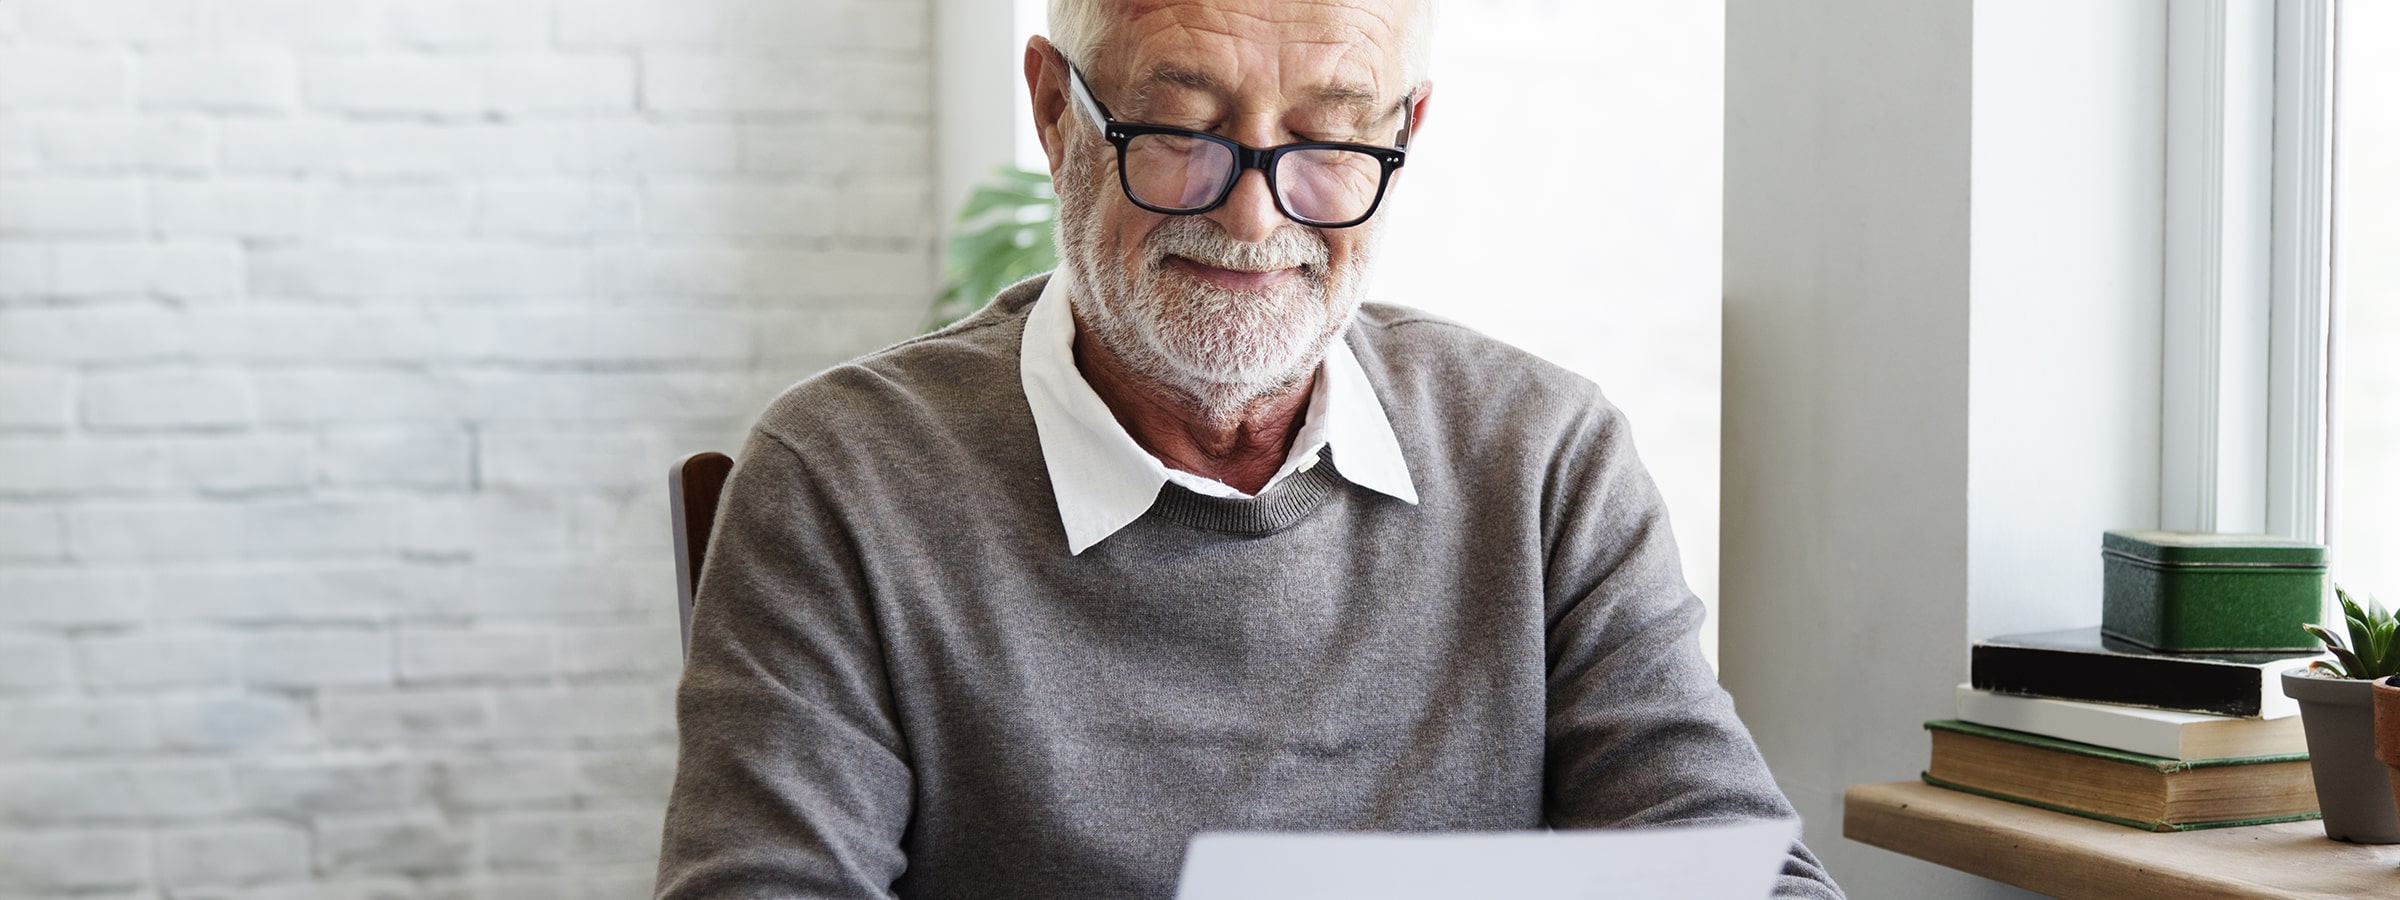 An older man reading through glasses